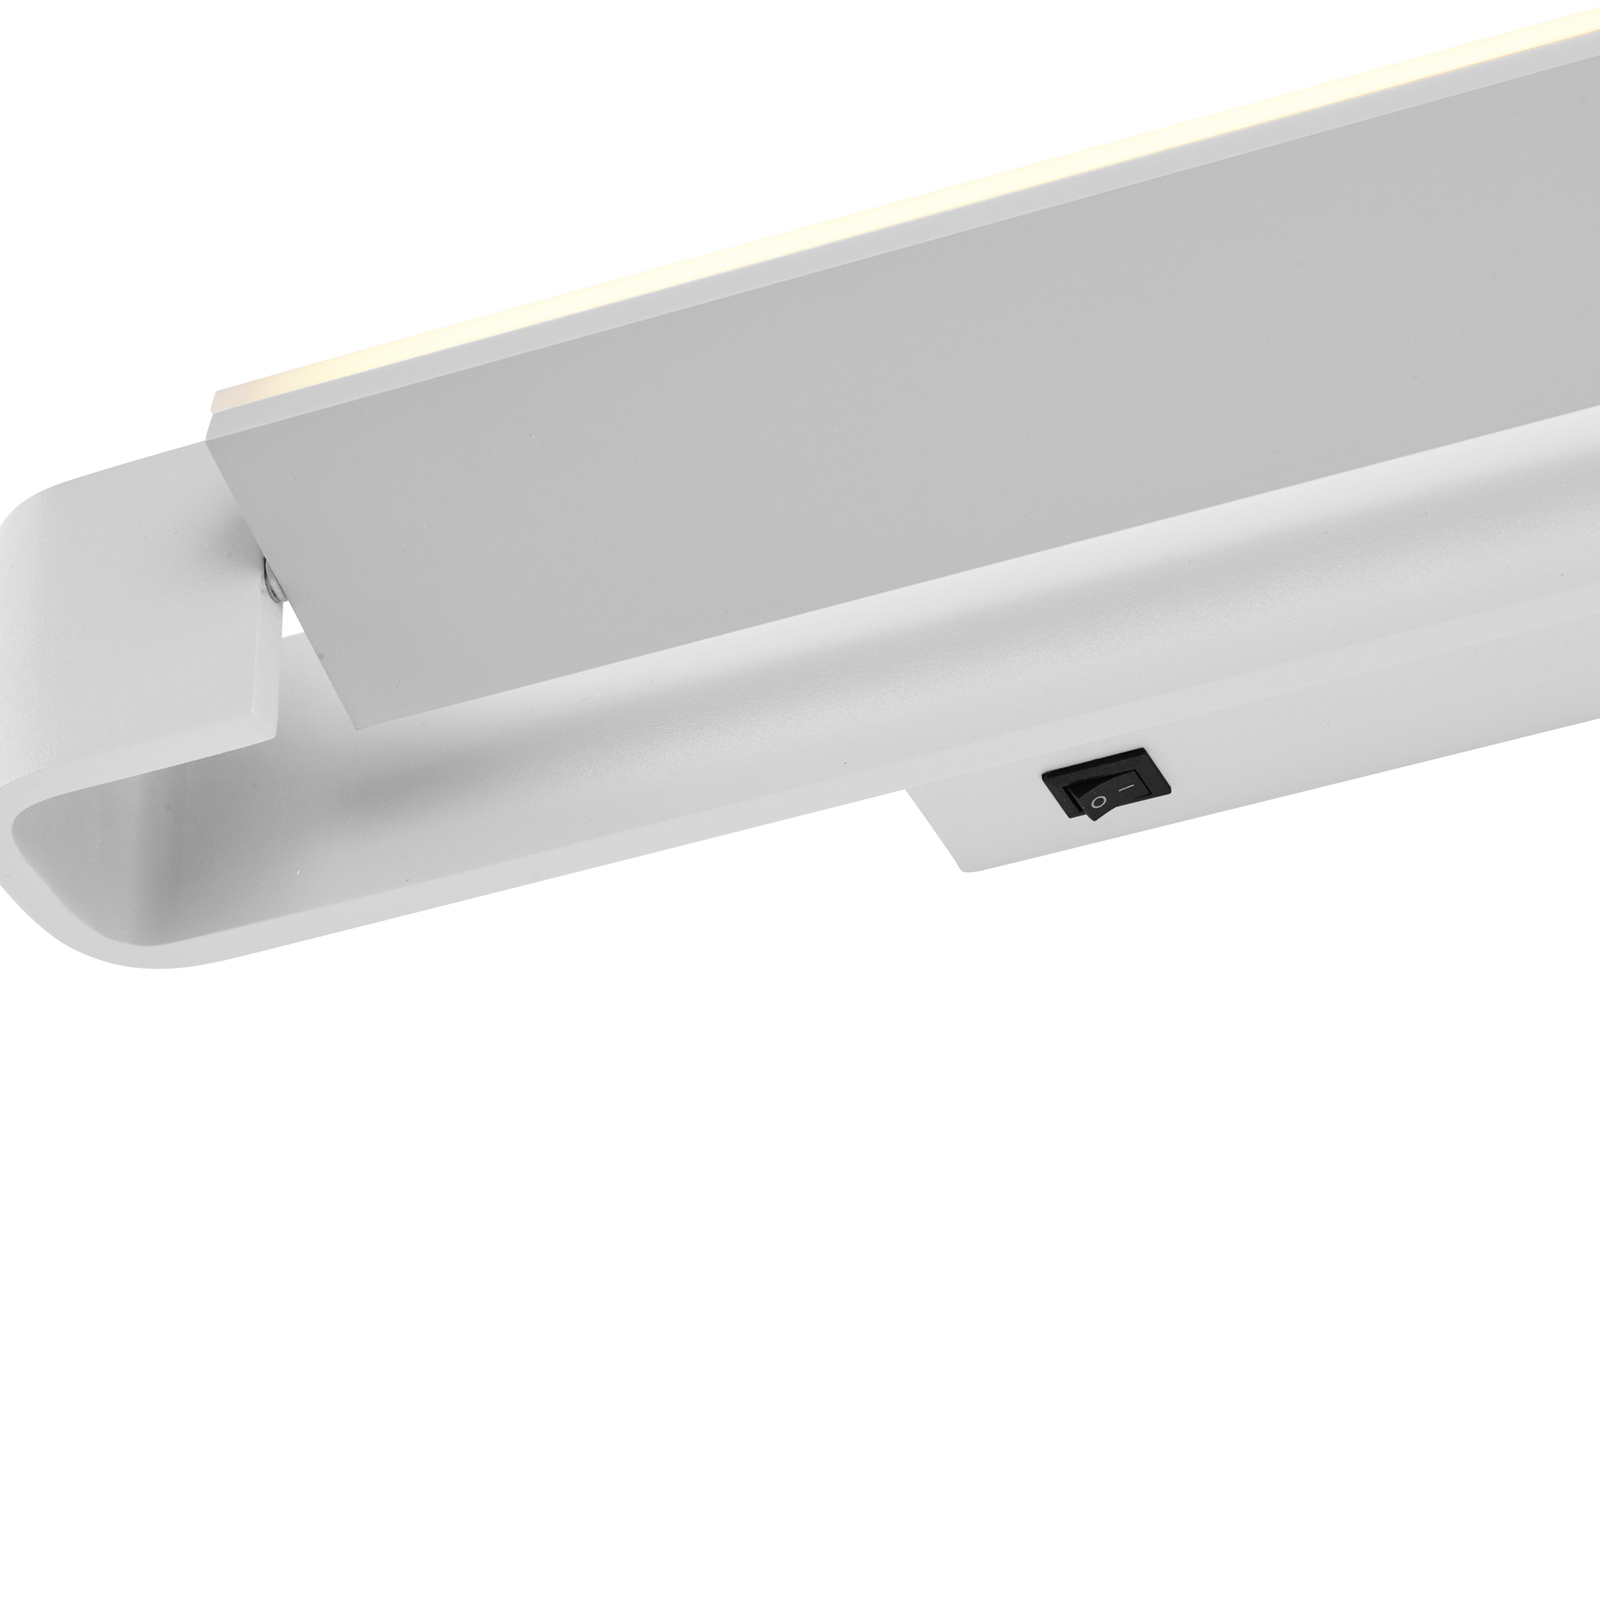 Box LED wall light, rotatable, white